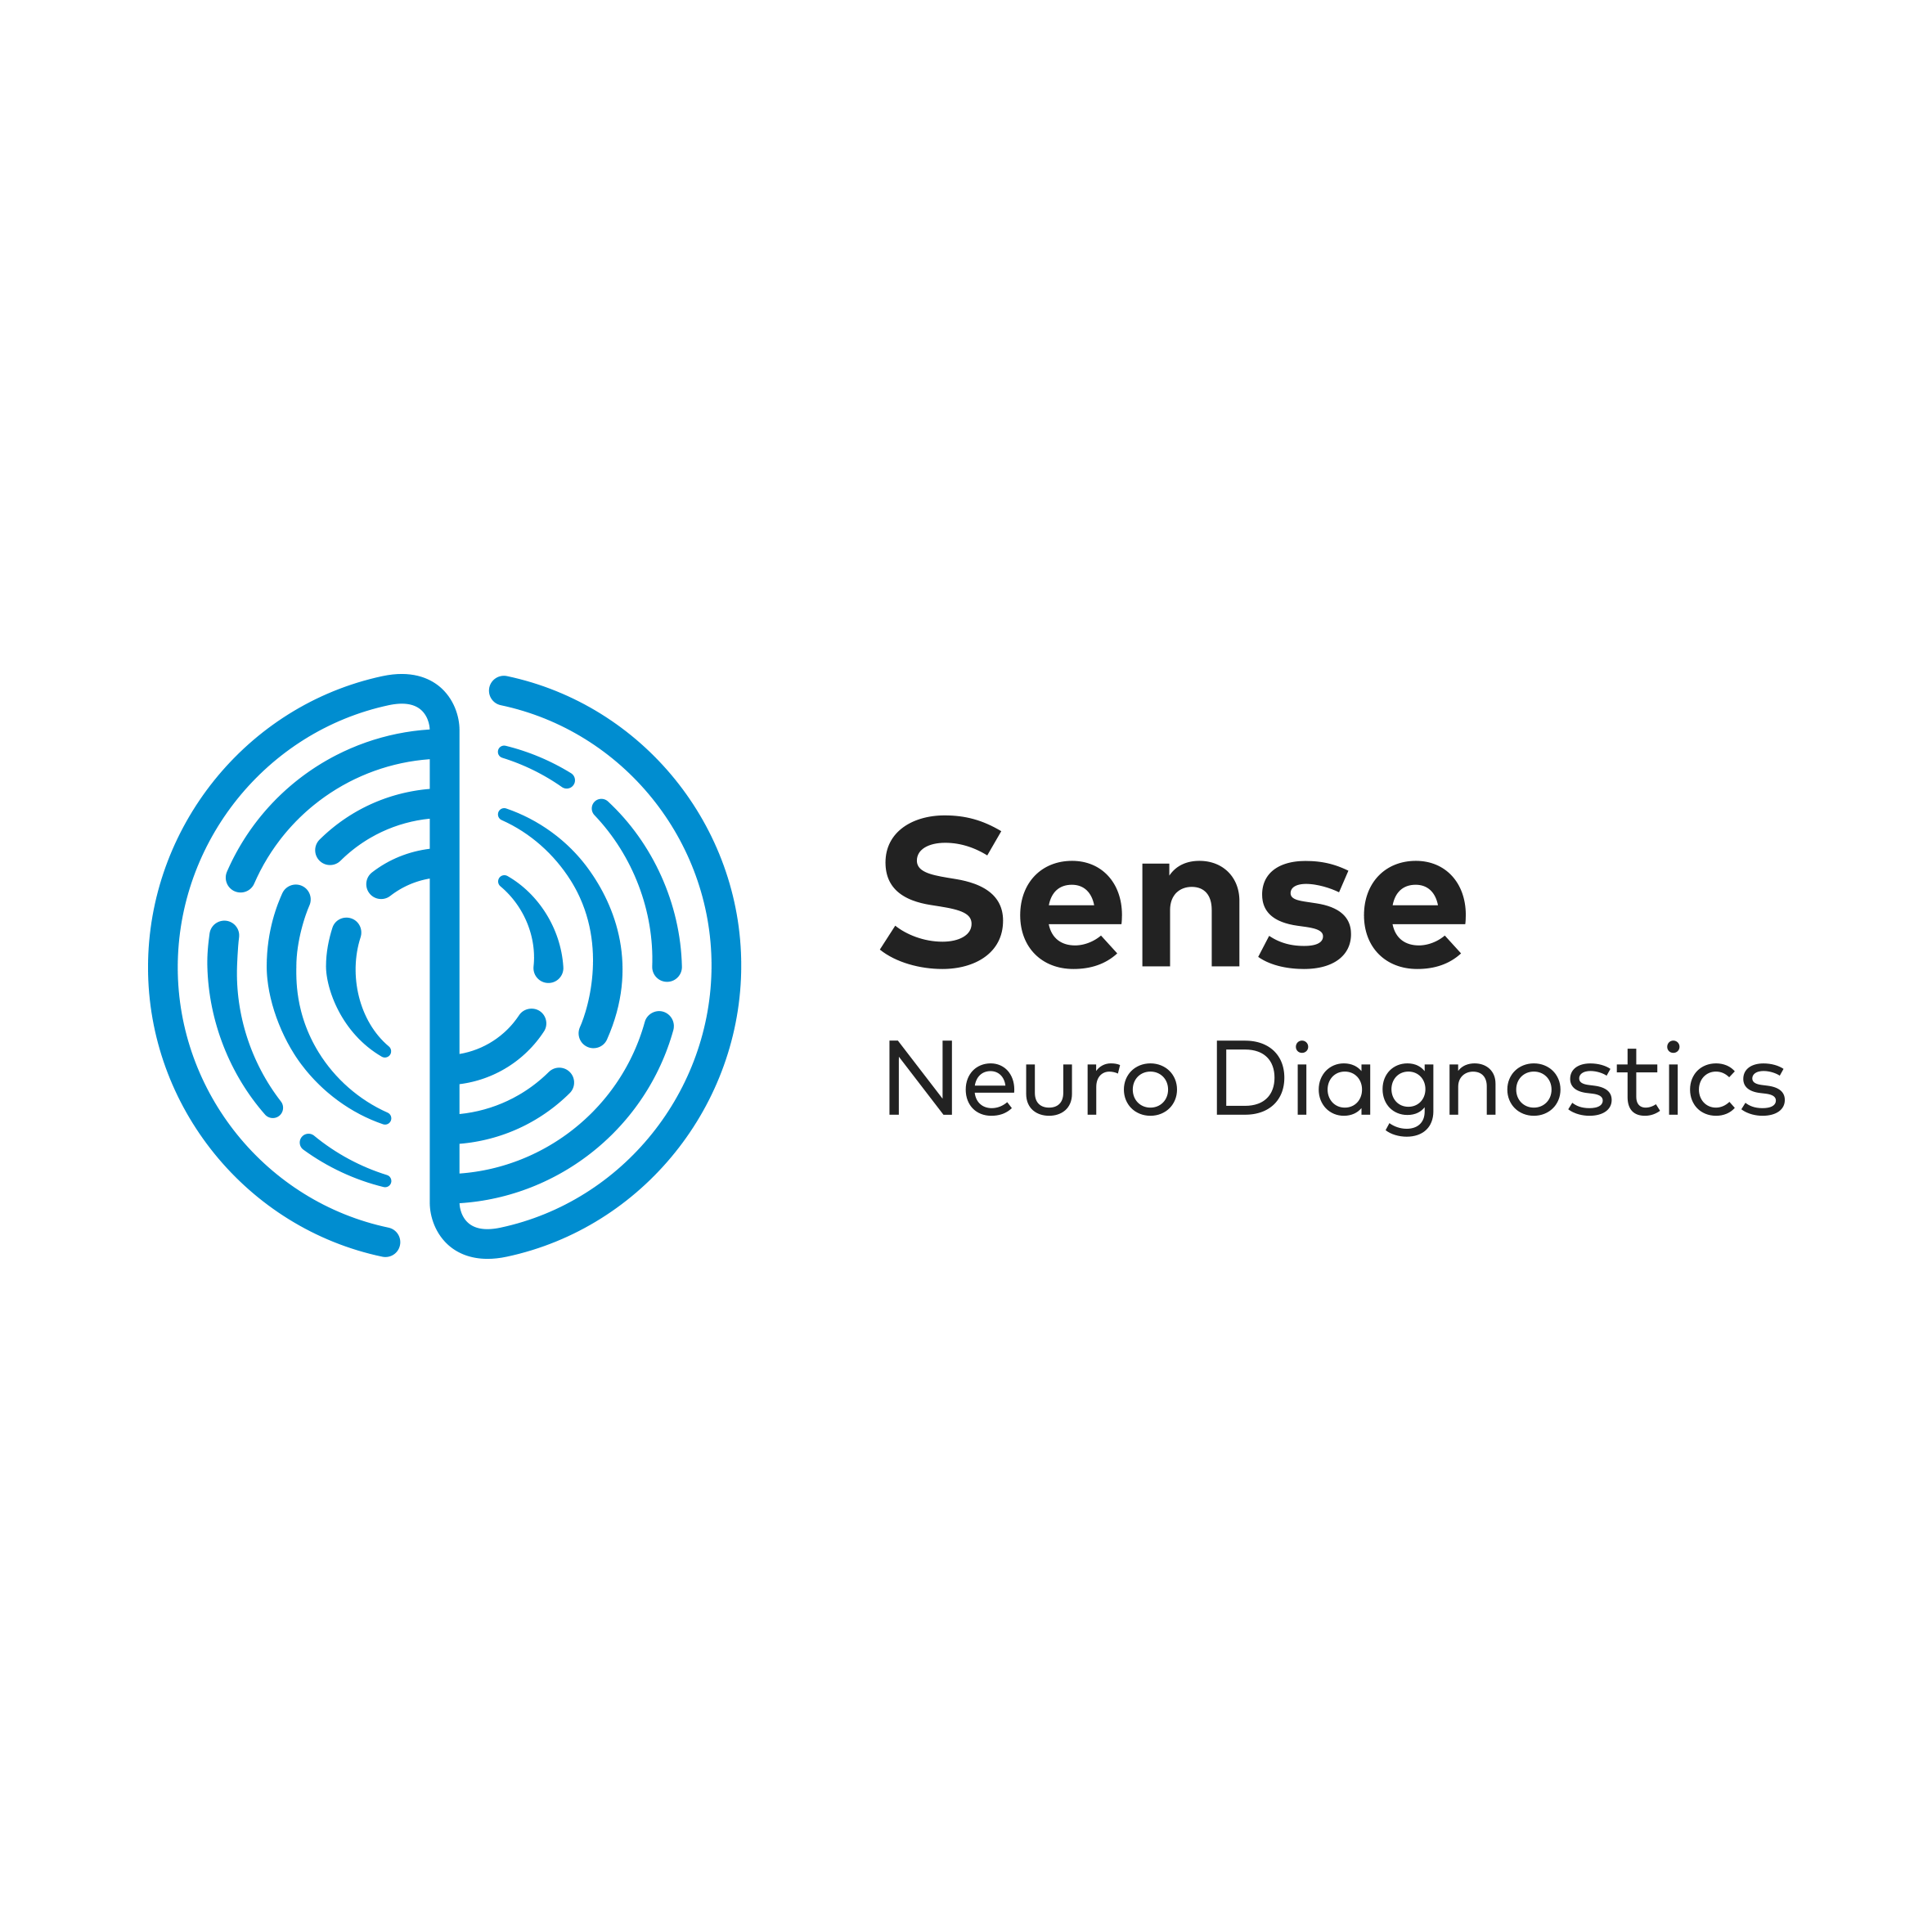 Sense Neuro Diagnostics - Sense is developing non-invasive technology